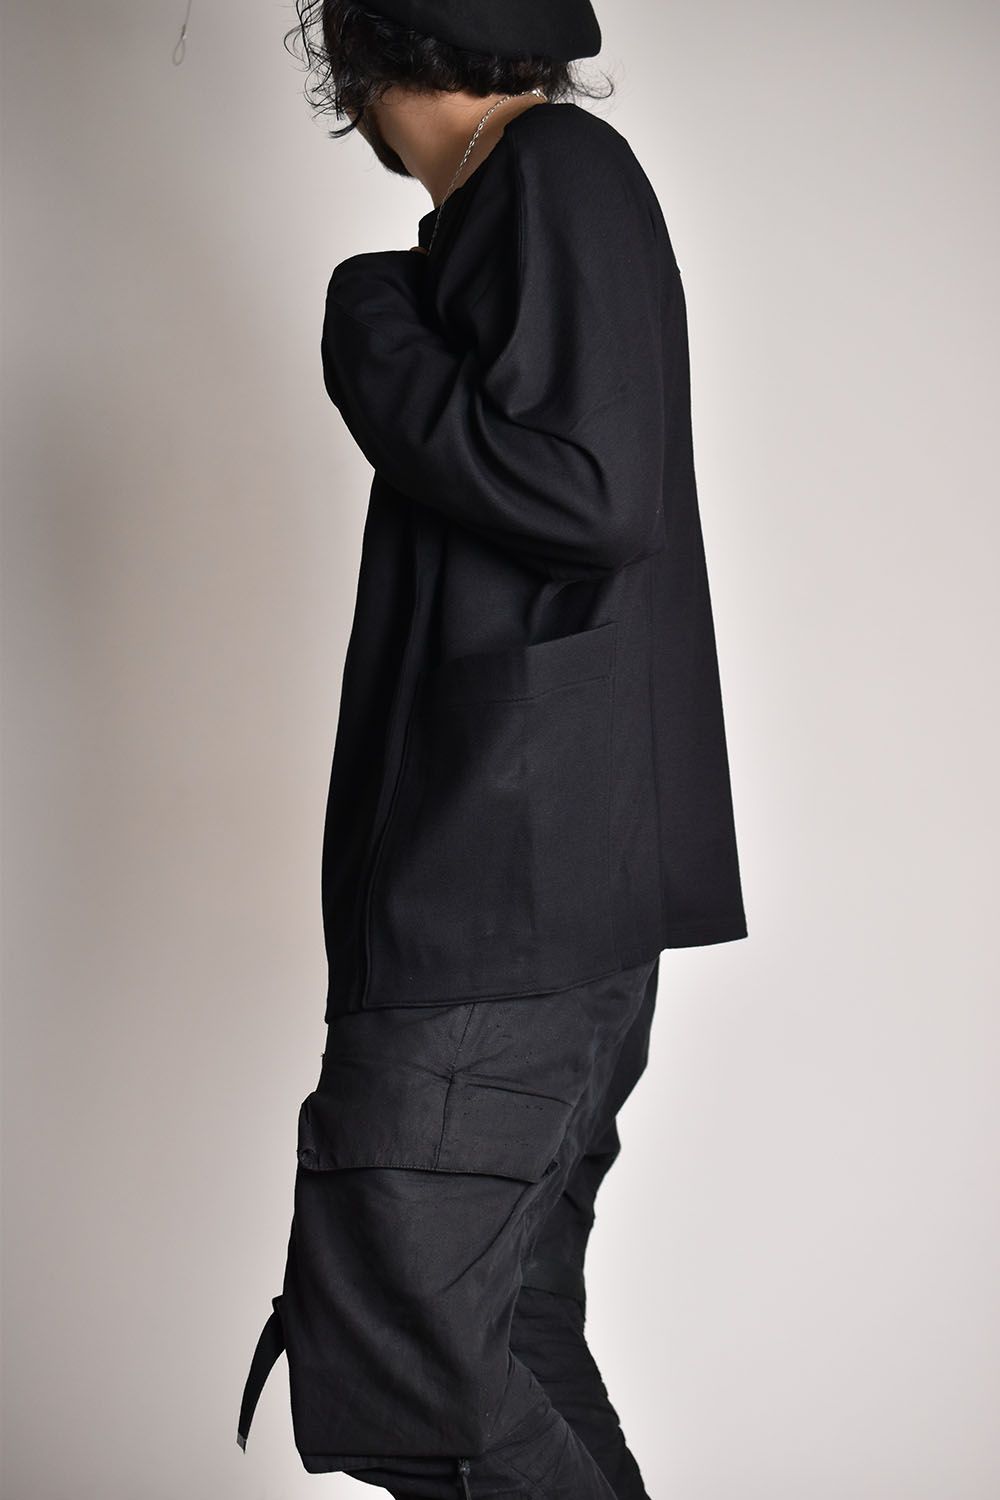 Compressed Wool Jersey Dolman Sleeve P/O"Black"/ウールジャージードルマンスリーブプルオーバー"ブラック"